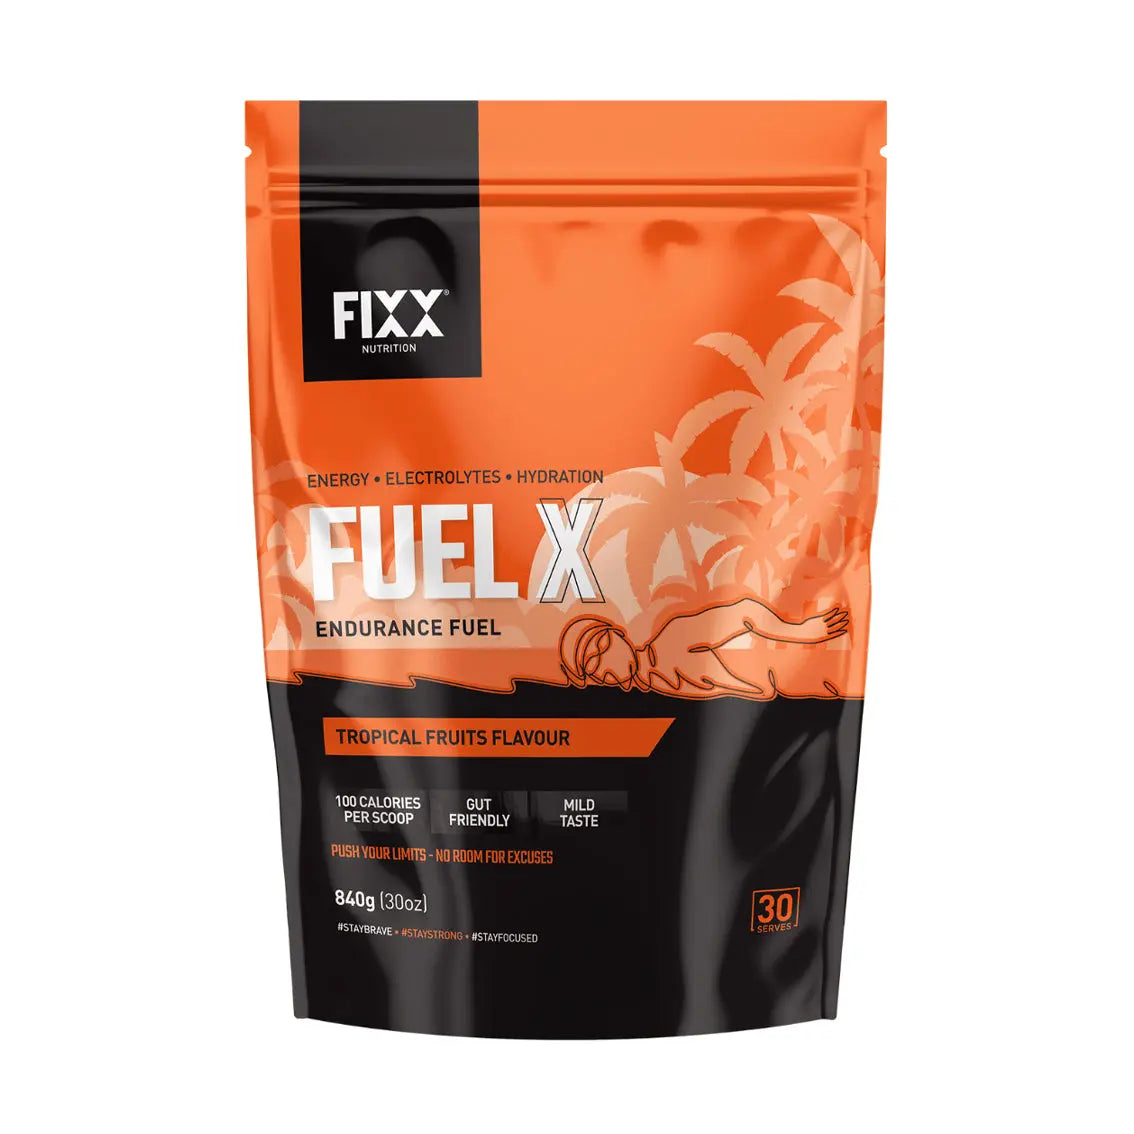 FIXX Nutrition Fuel X Drink Mix Small Bag 840g